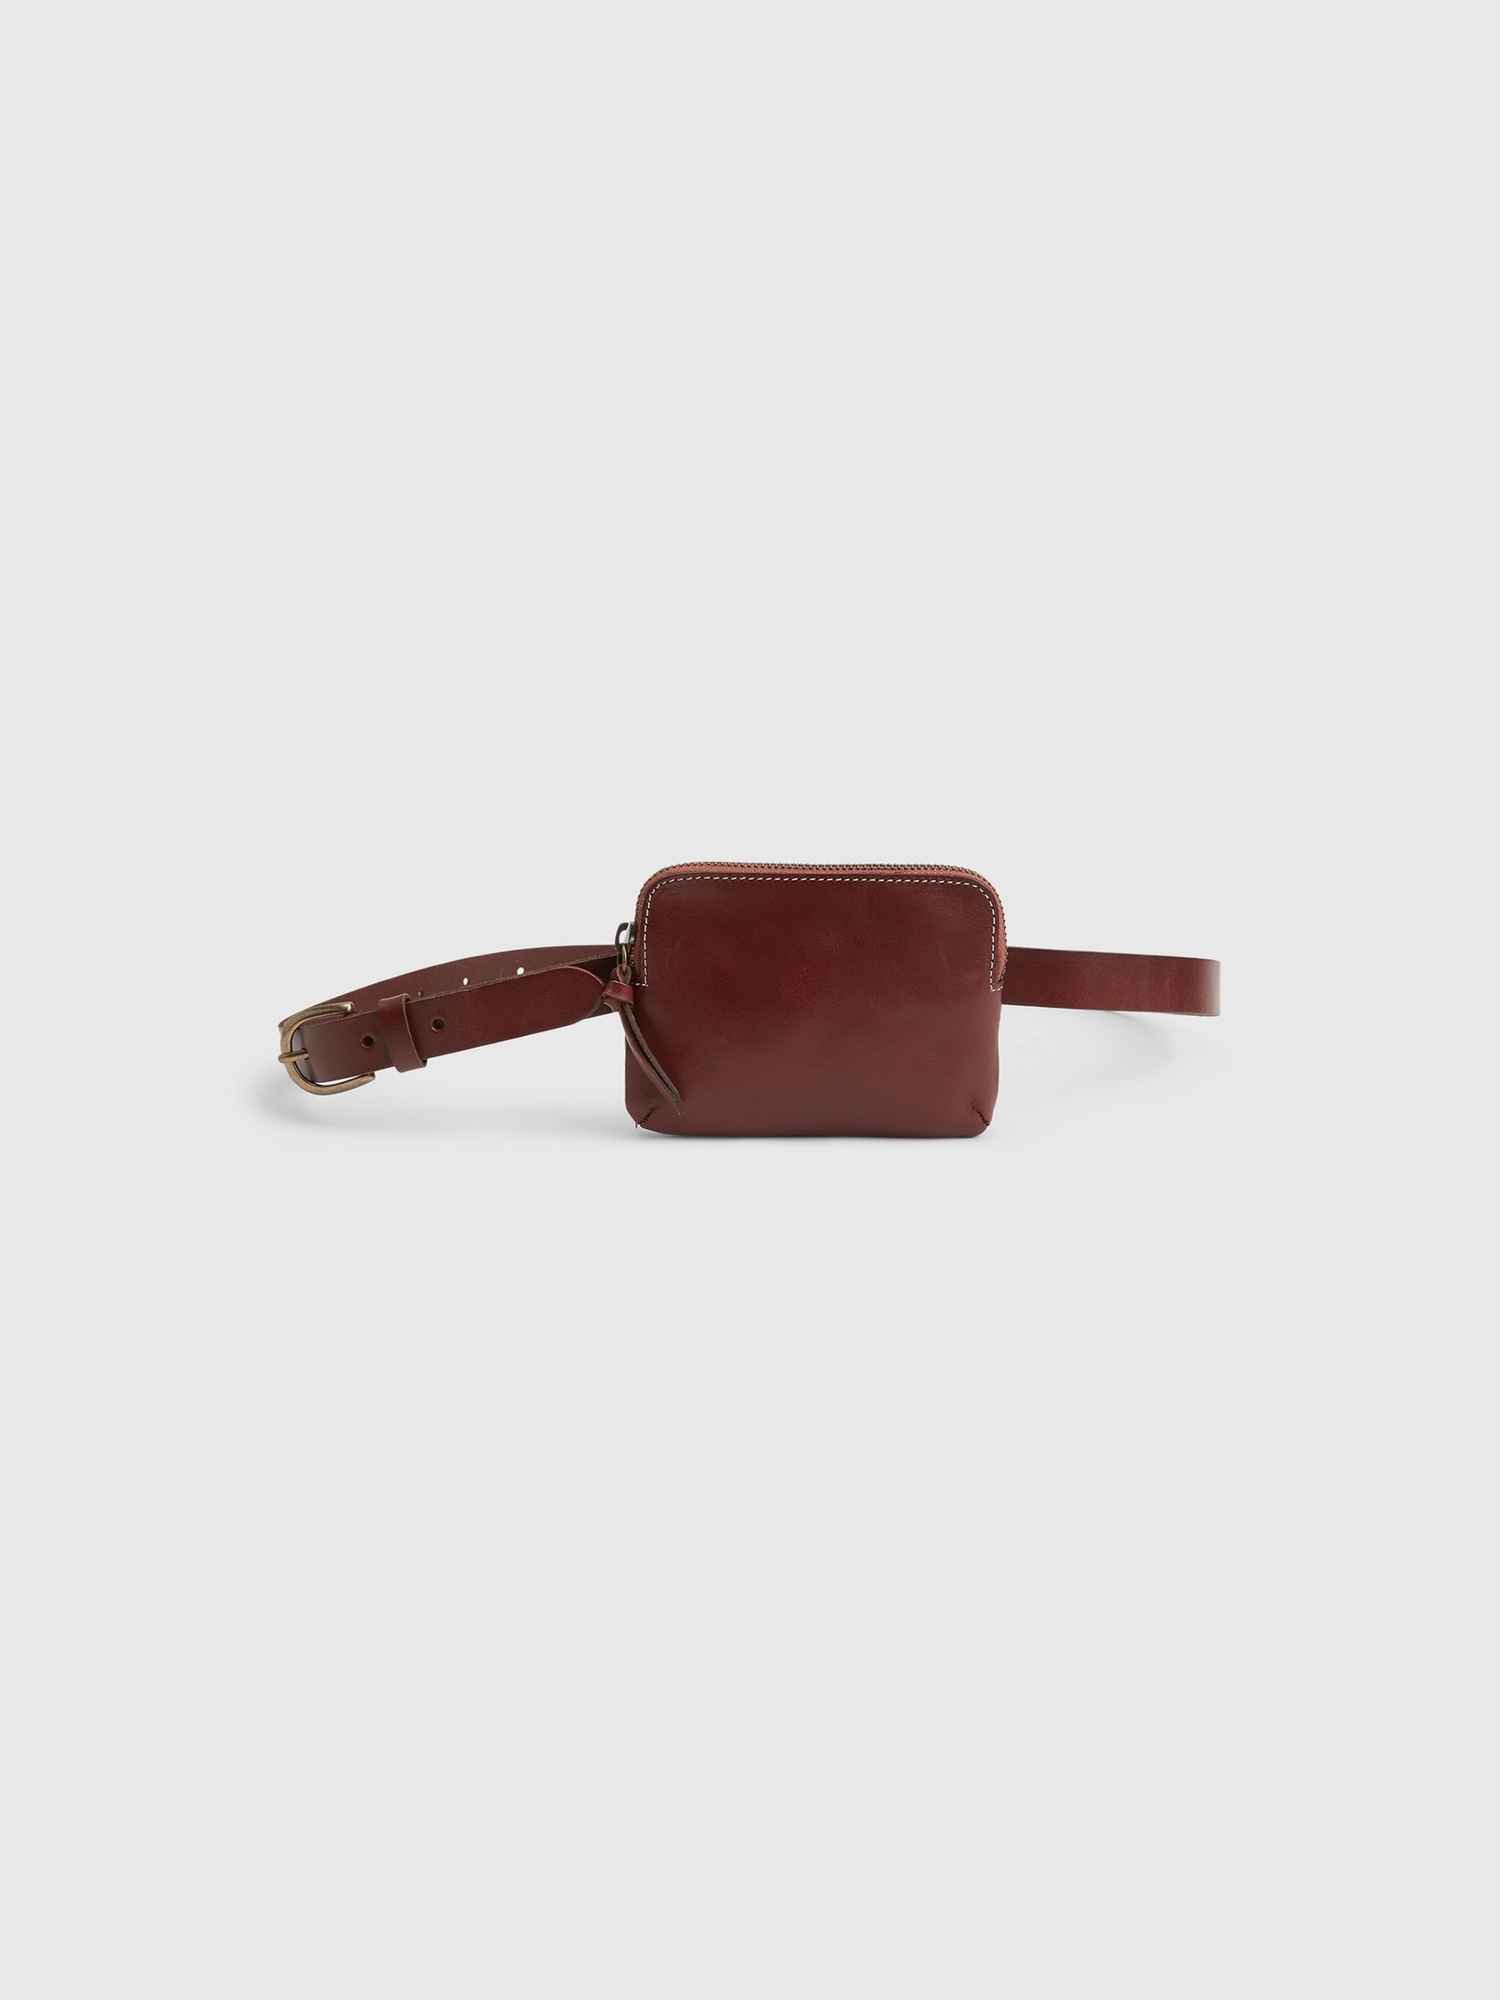 Gap Leather Belt Bag In Cognac Brown